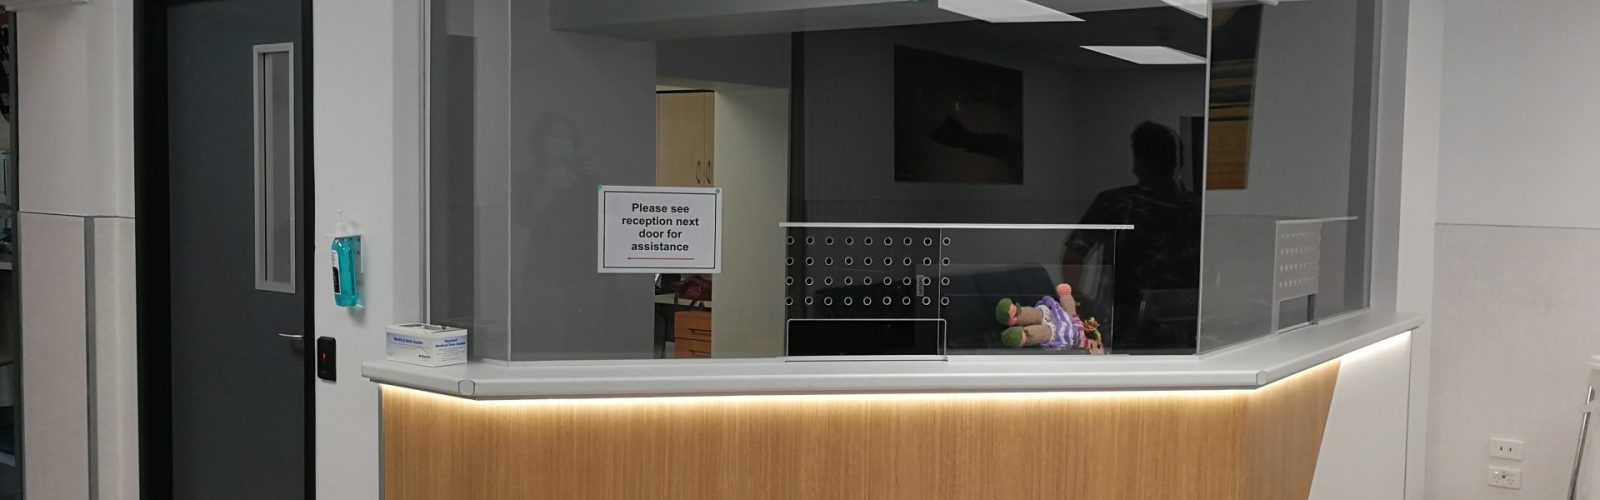 Whangarei Hospital ED Reception Extension - Header Image